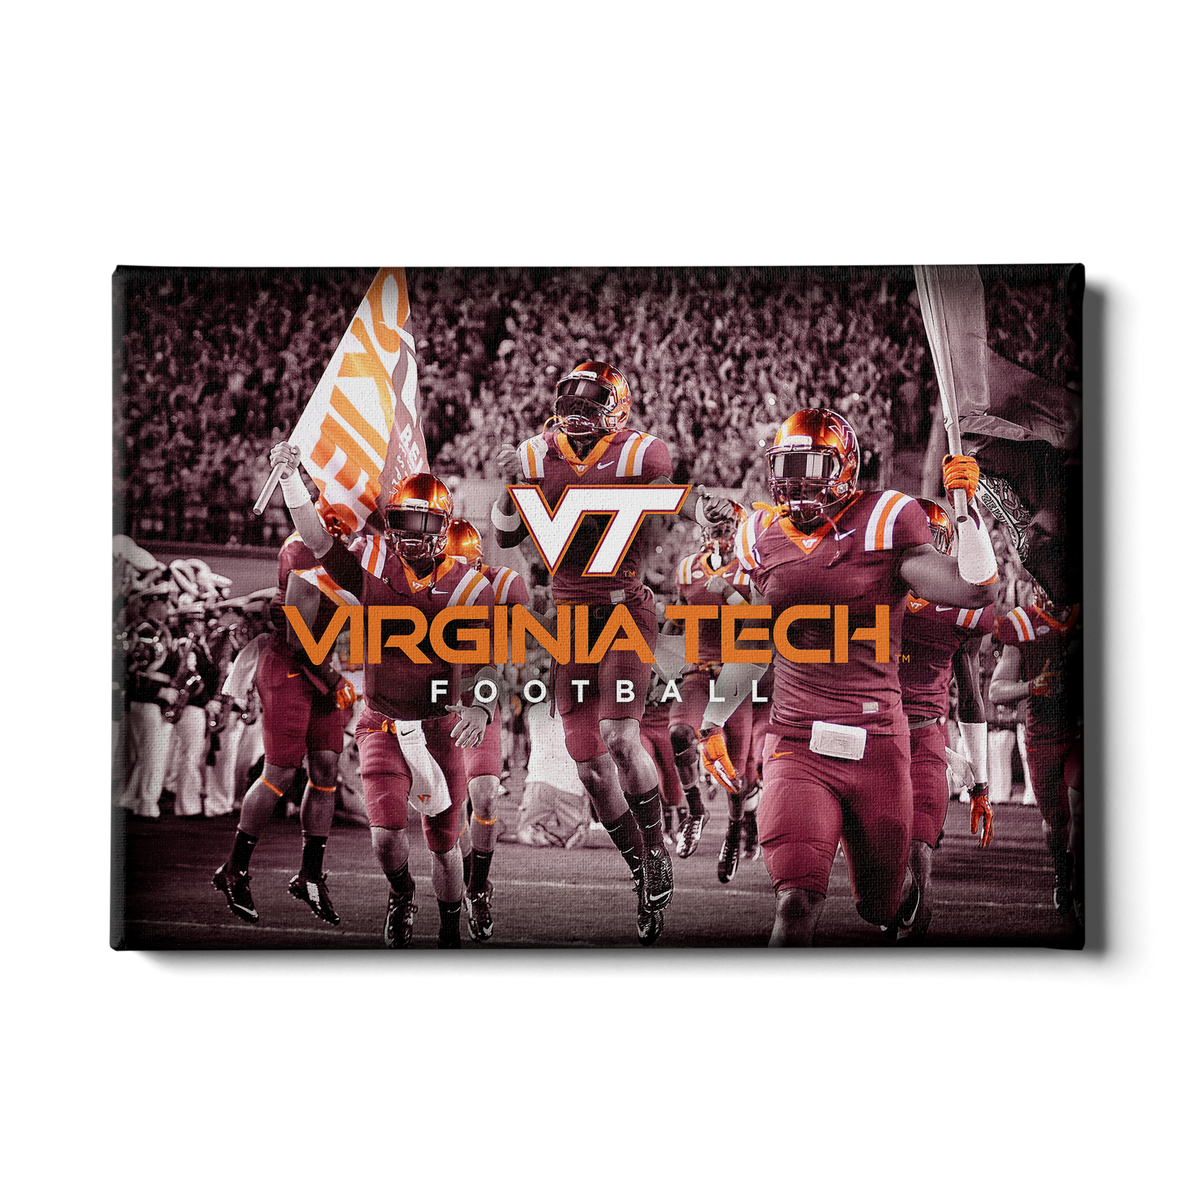 Virginia Tech Hokies "Virginia Tech Football" Licensed Wall Art